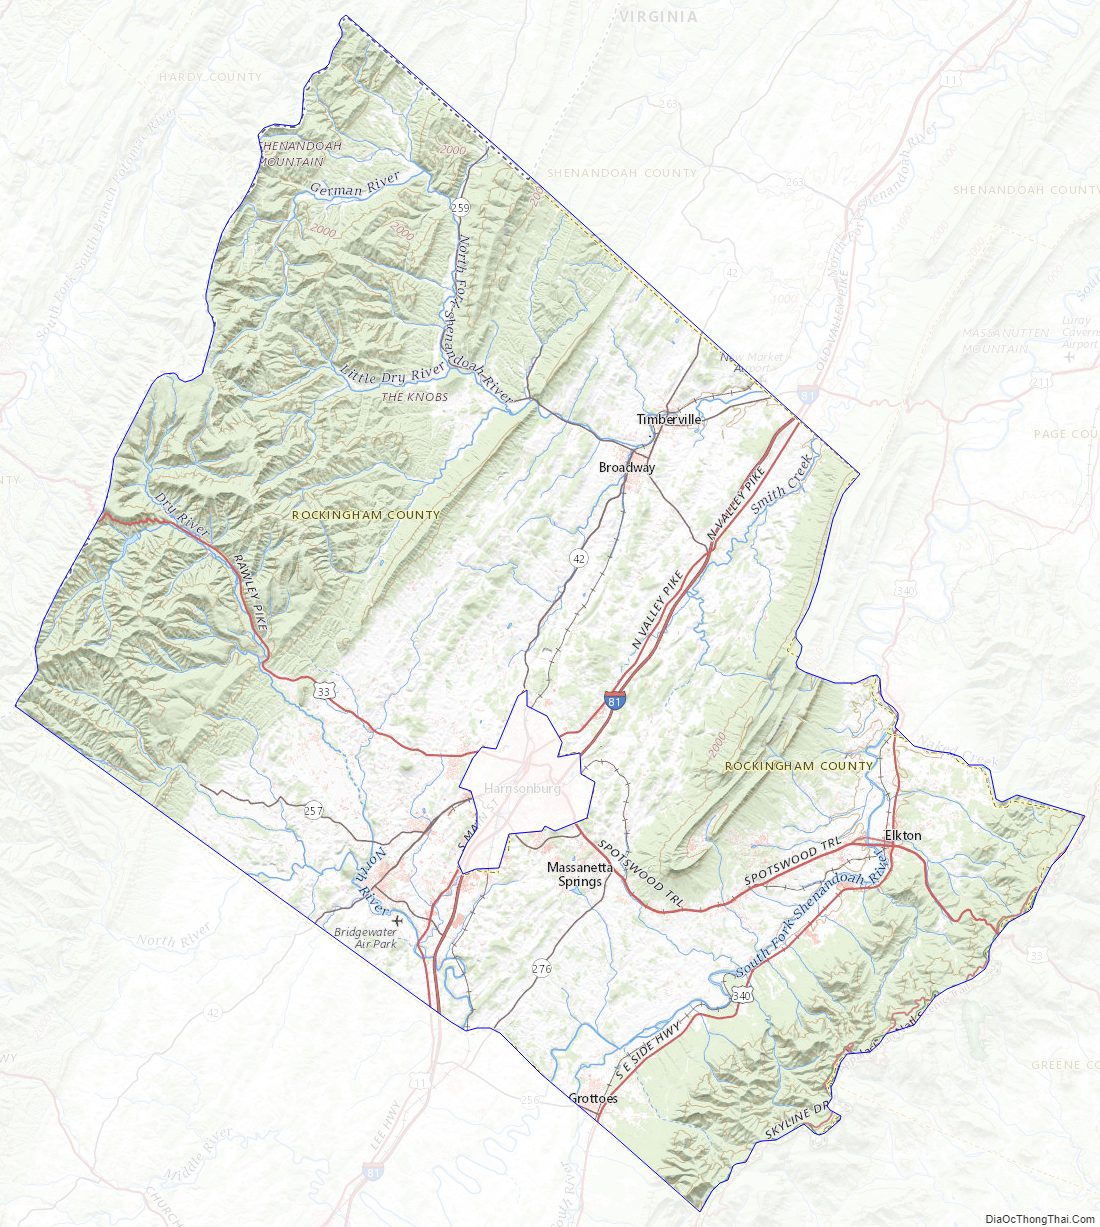 Topographic map of Rockingham County, Virginia